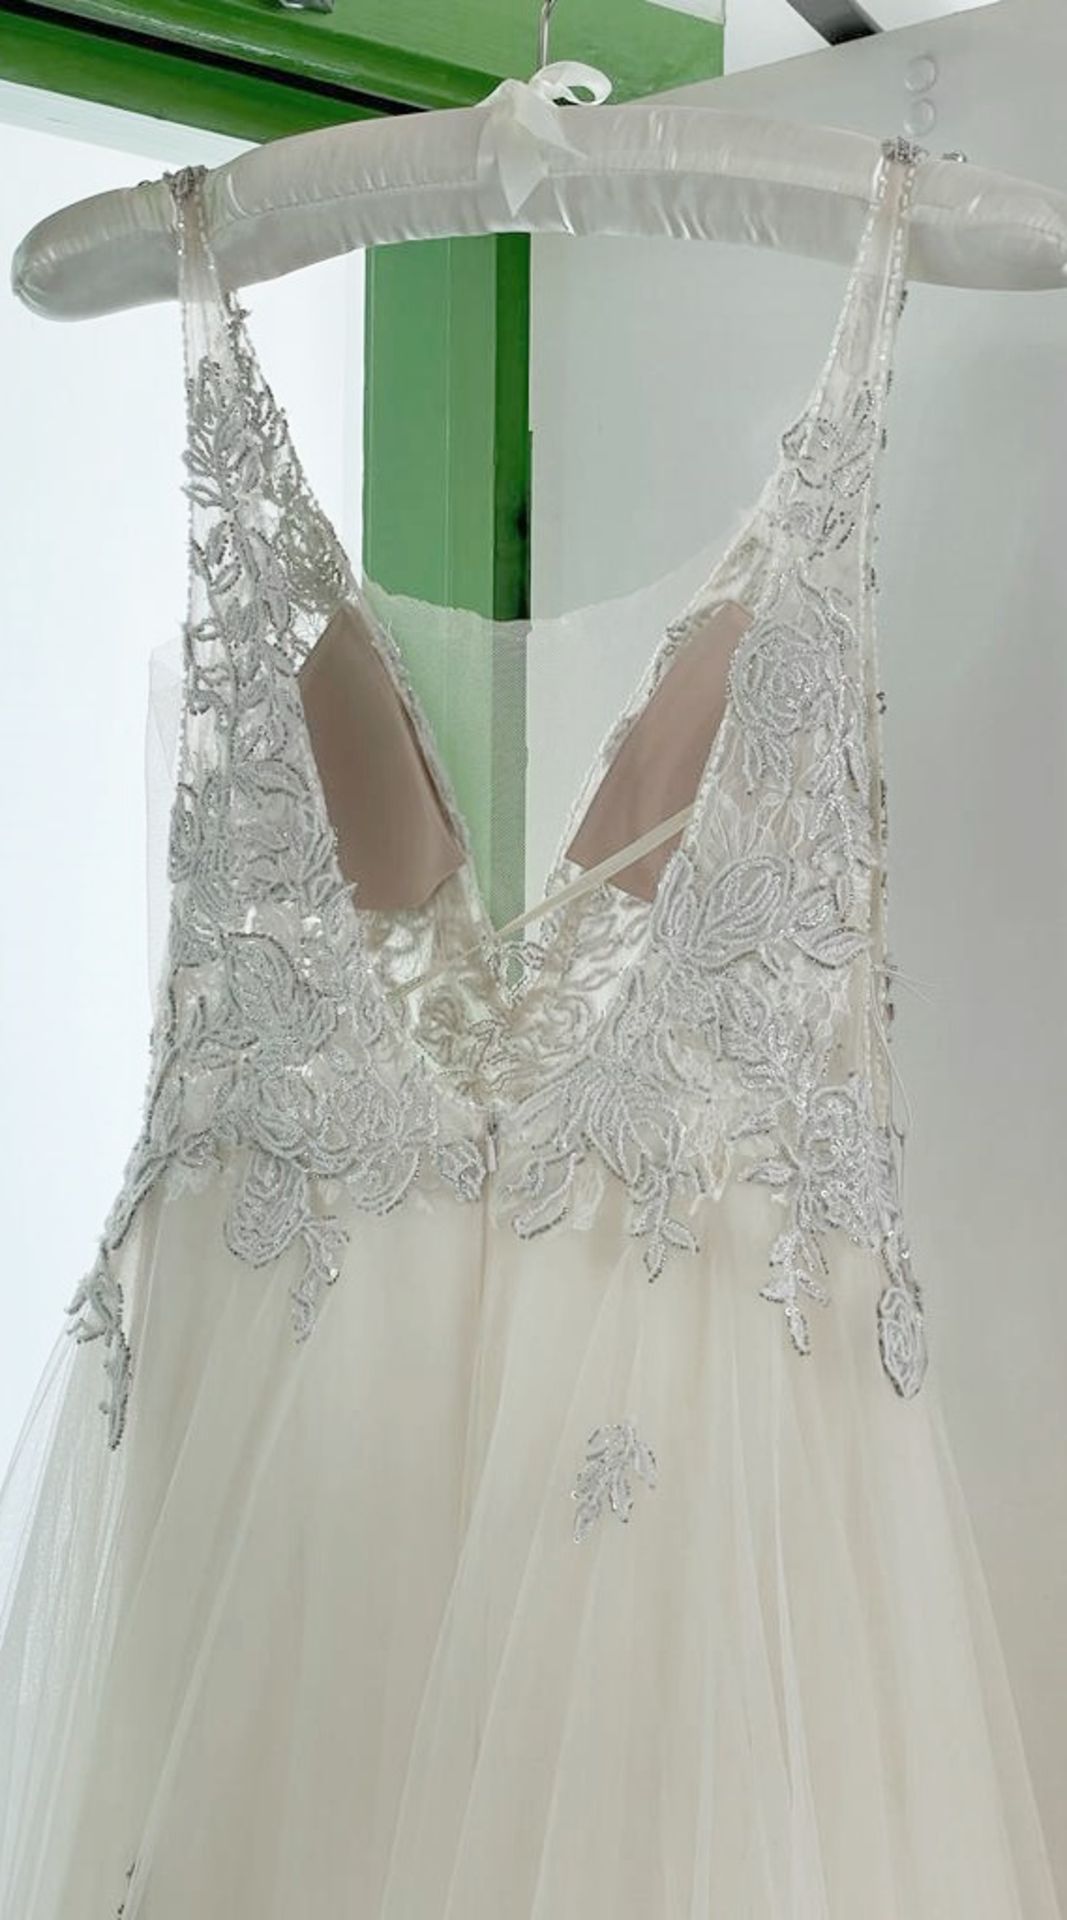 1 x ANNASUL Y 'Cameron' Designer Wedding Dress Bridal Gown - Size: UK 12 - Ref: DRS043 - CL823 - - Image 10 of 13